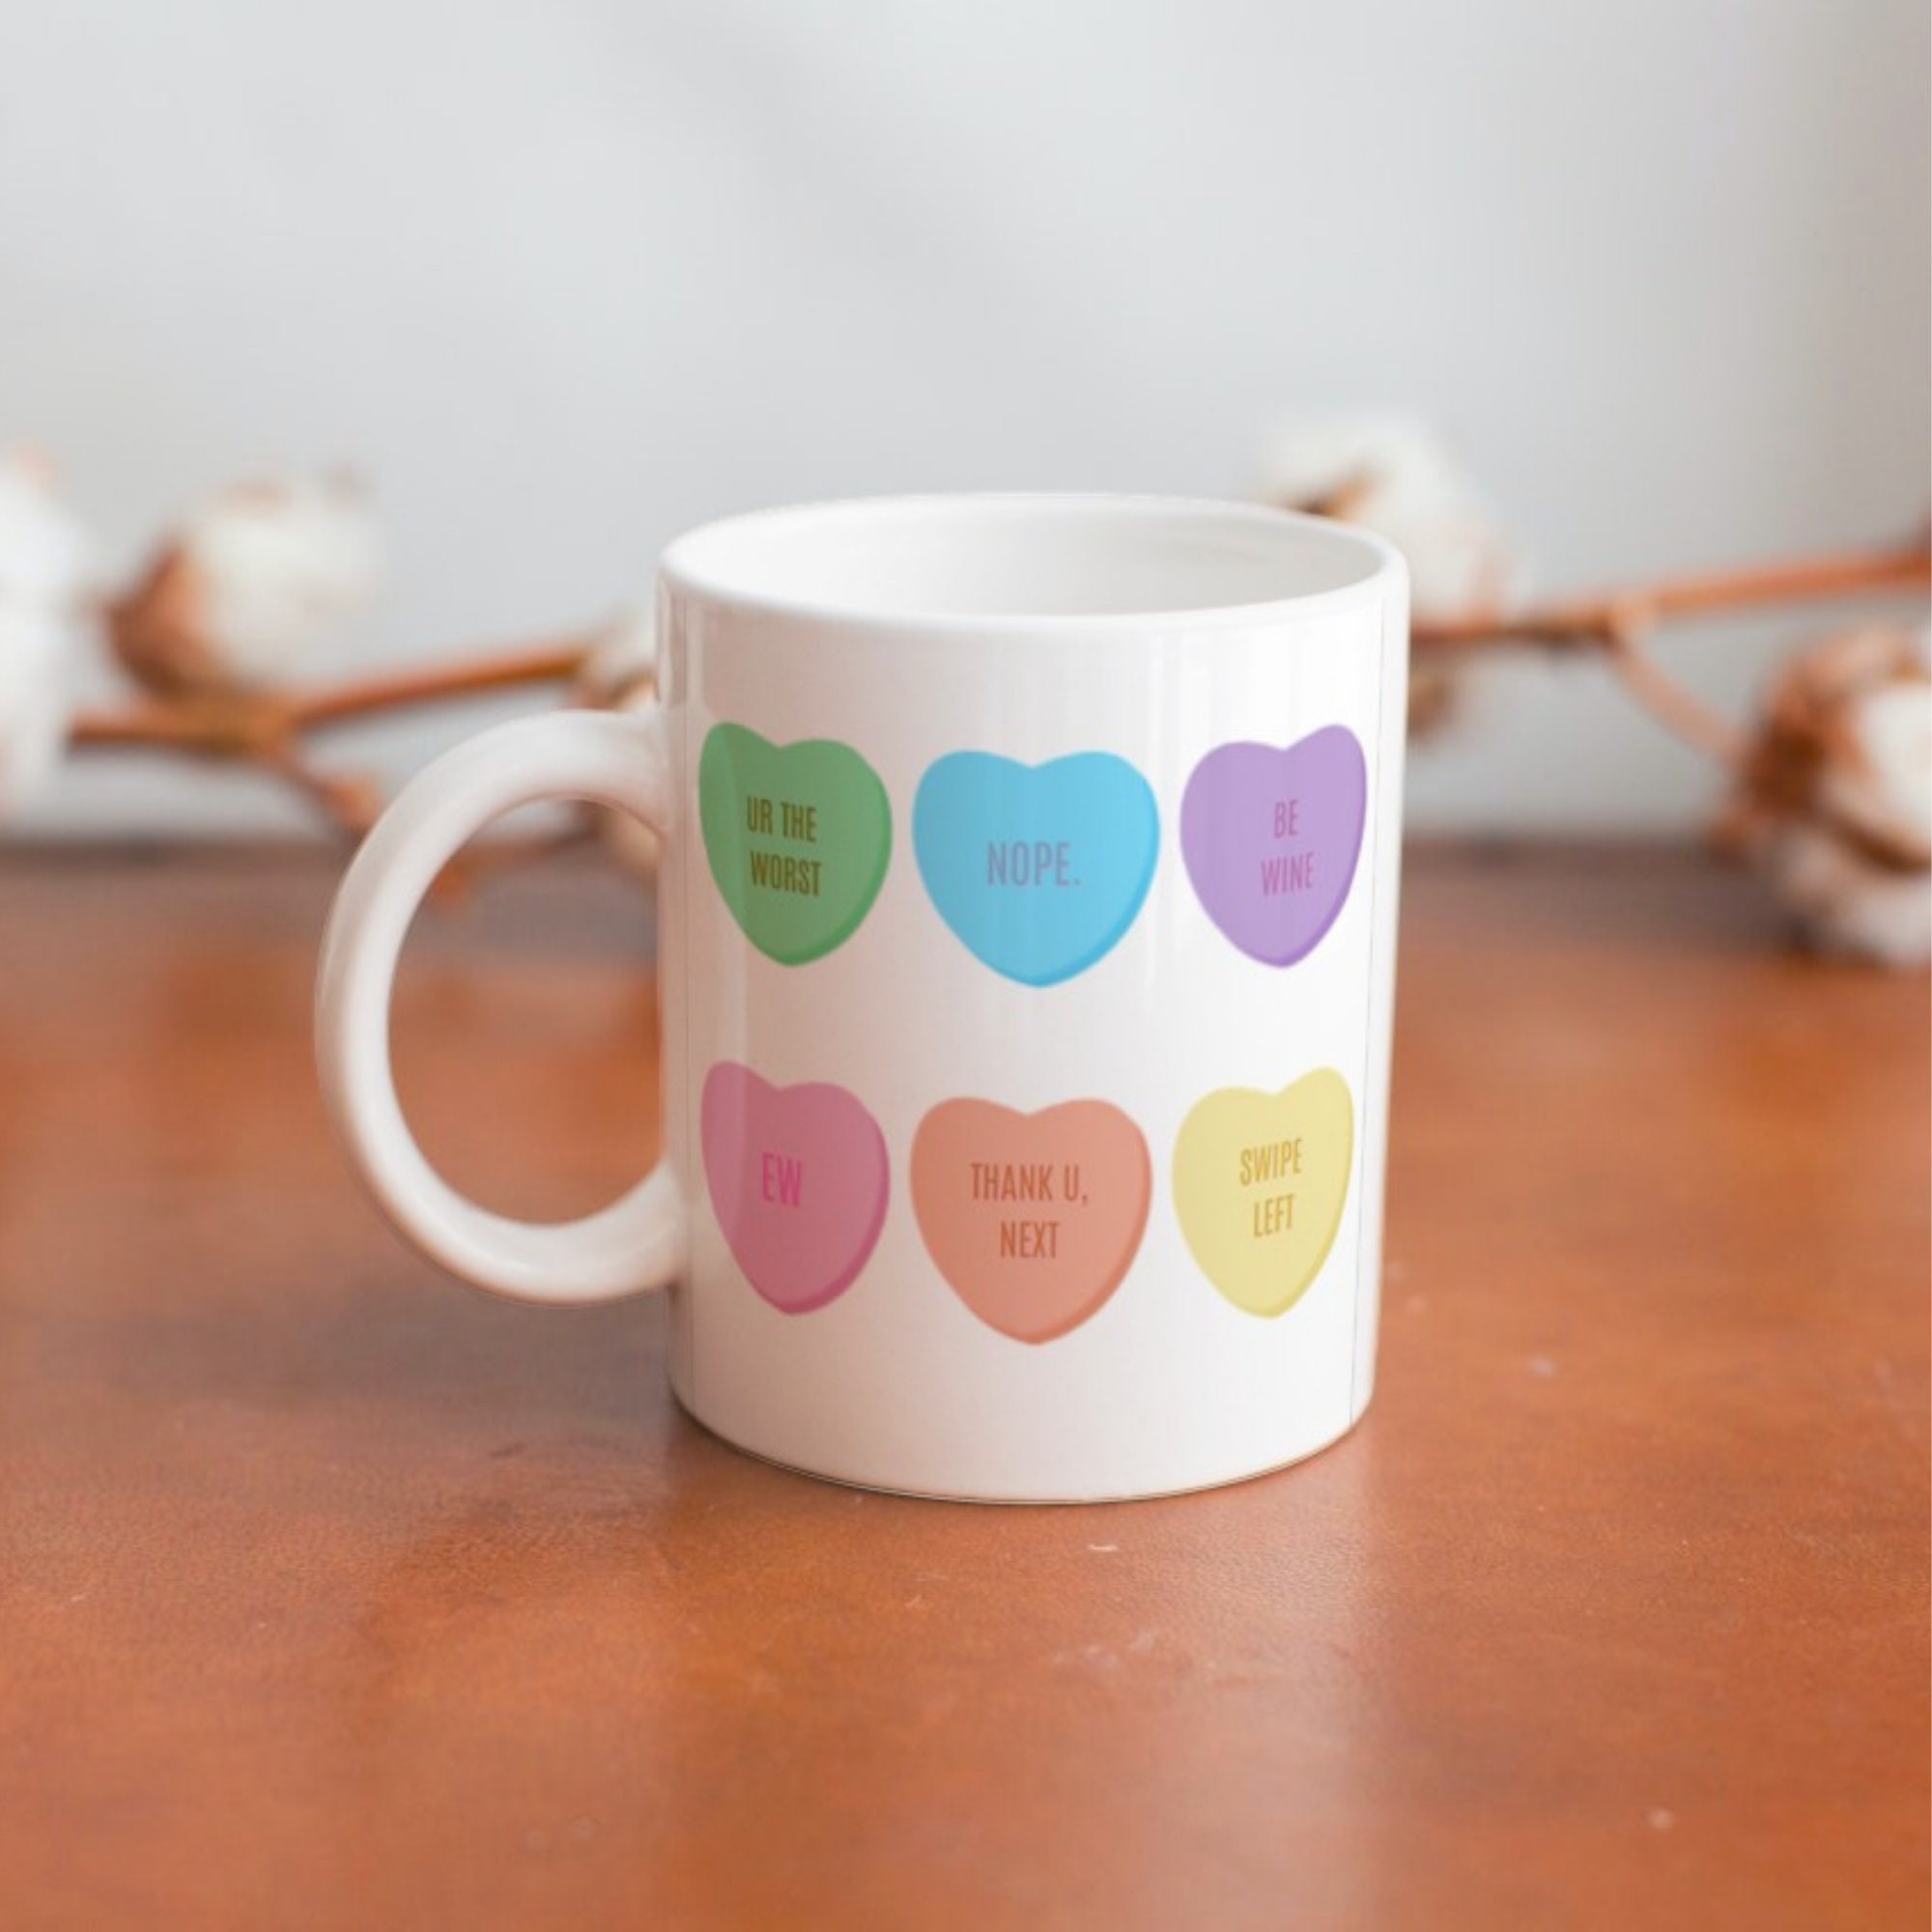 Ew Candy Heart Mug Rude Valentines Funny Valentine Gift Funny Valentine's Day Mug Anti-Valentine